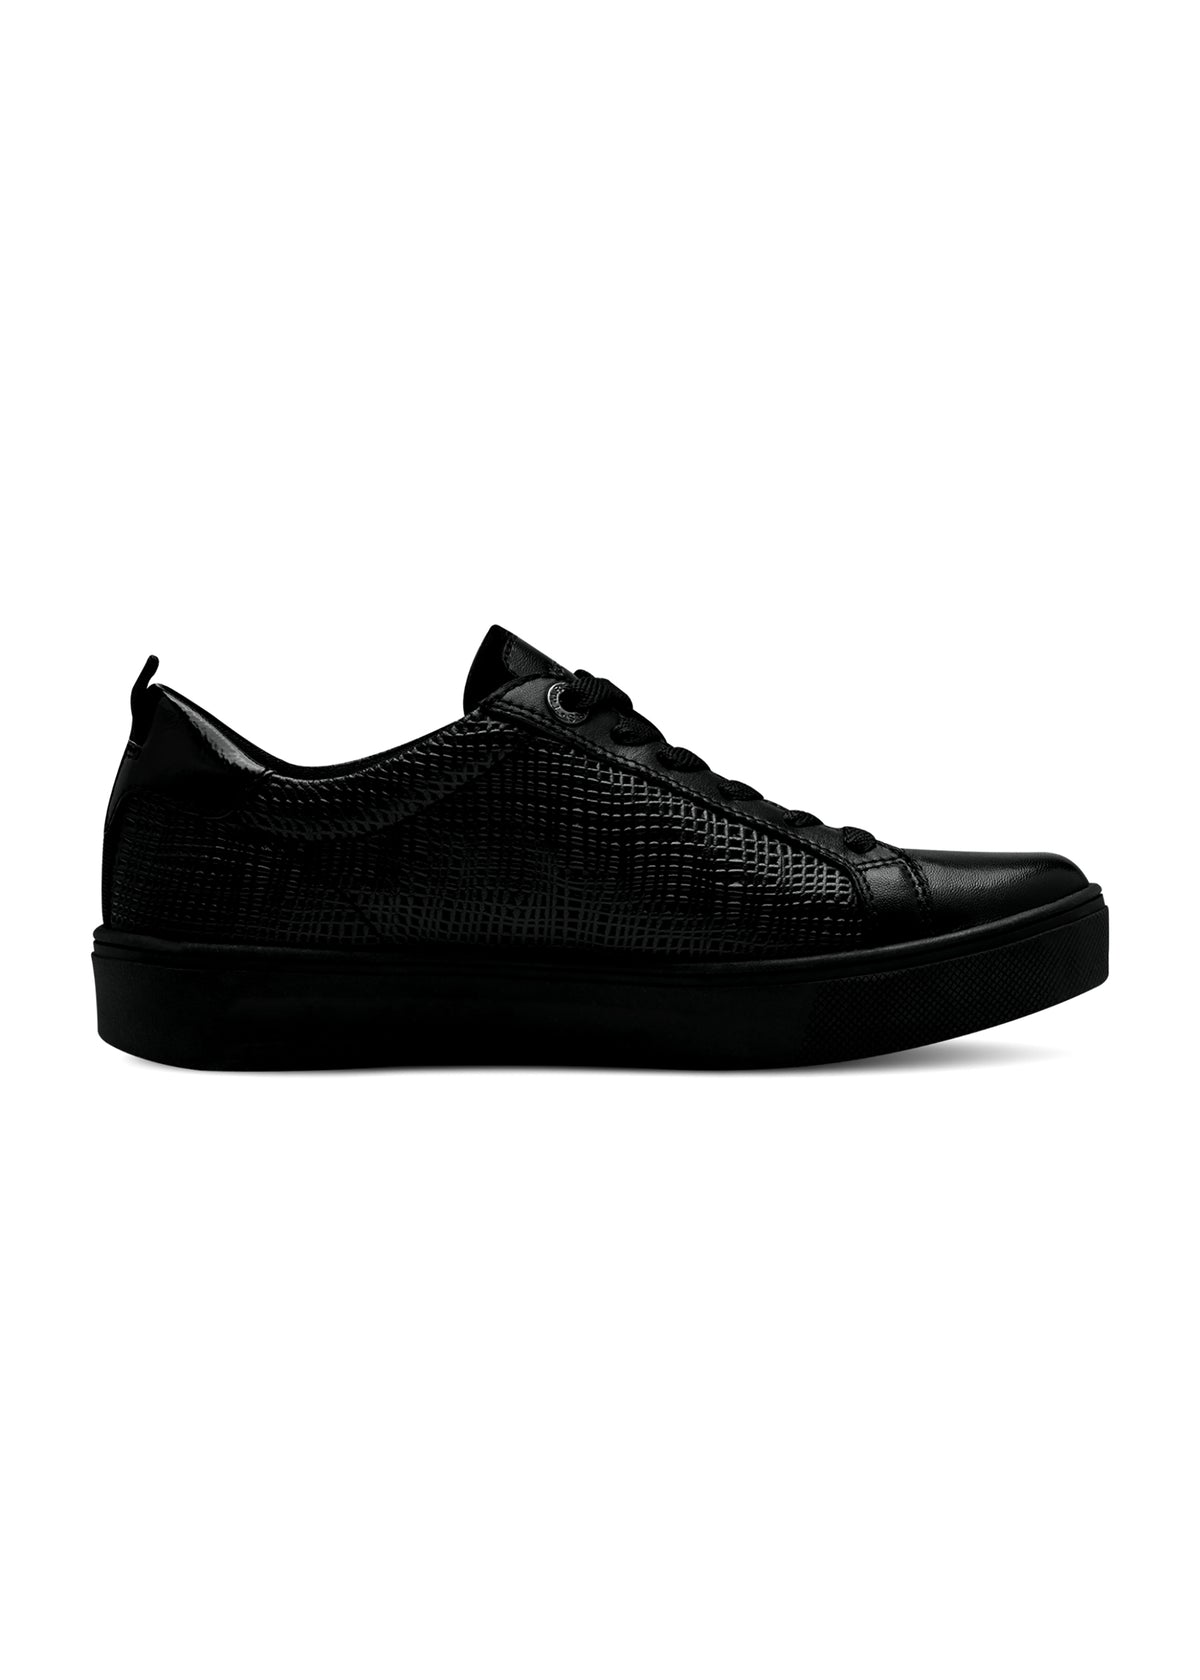 Sneakers - svart texturerat läder